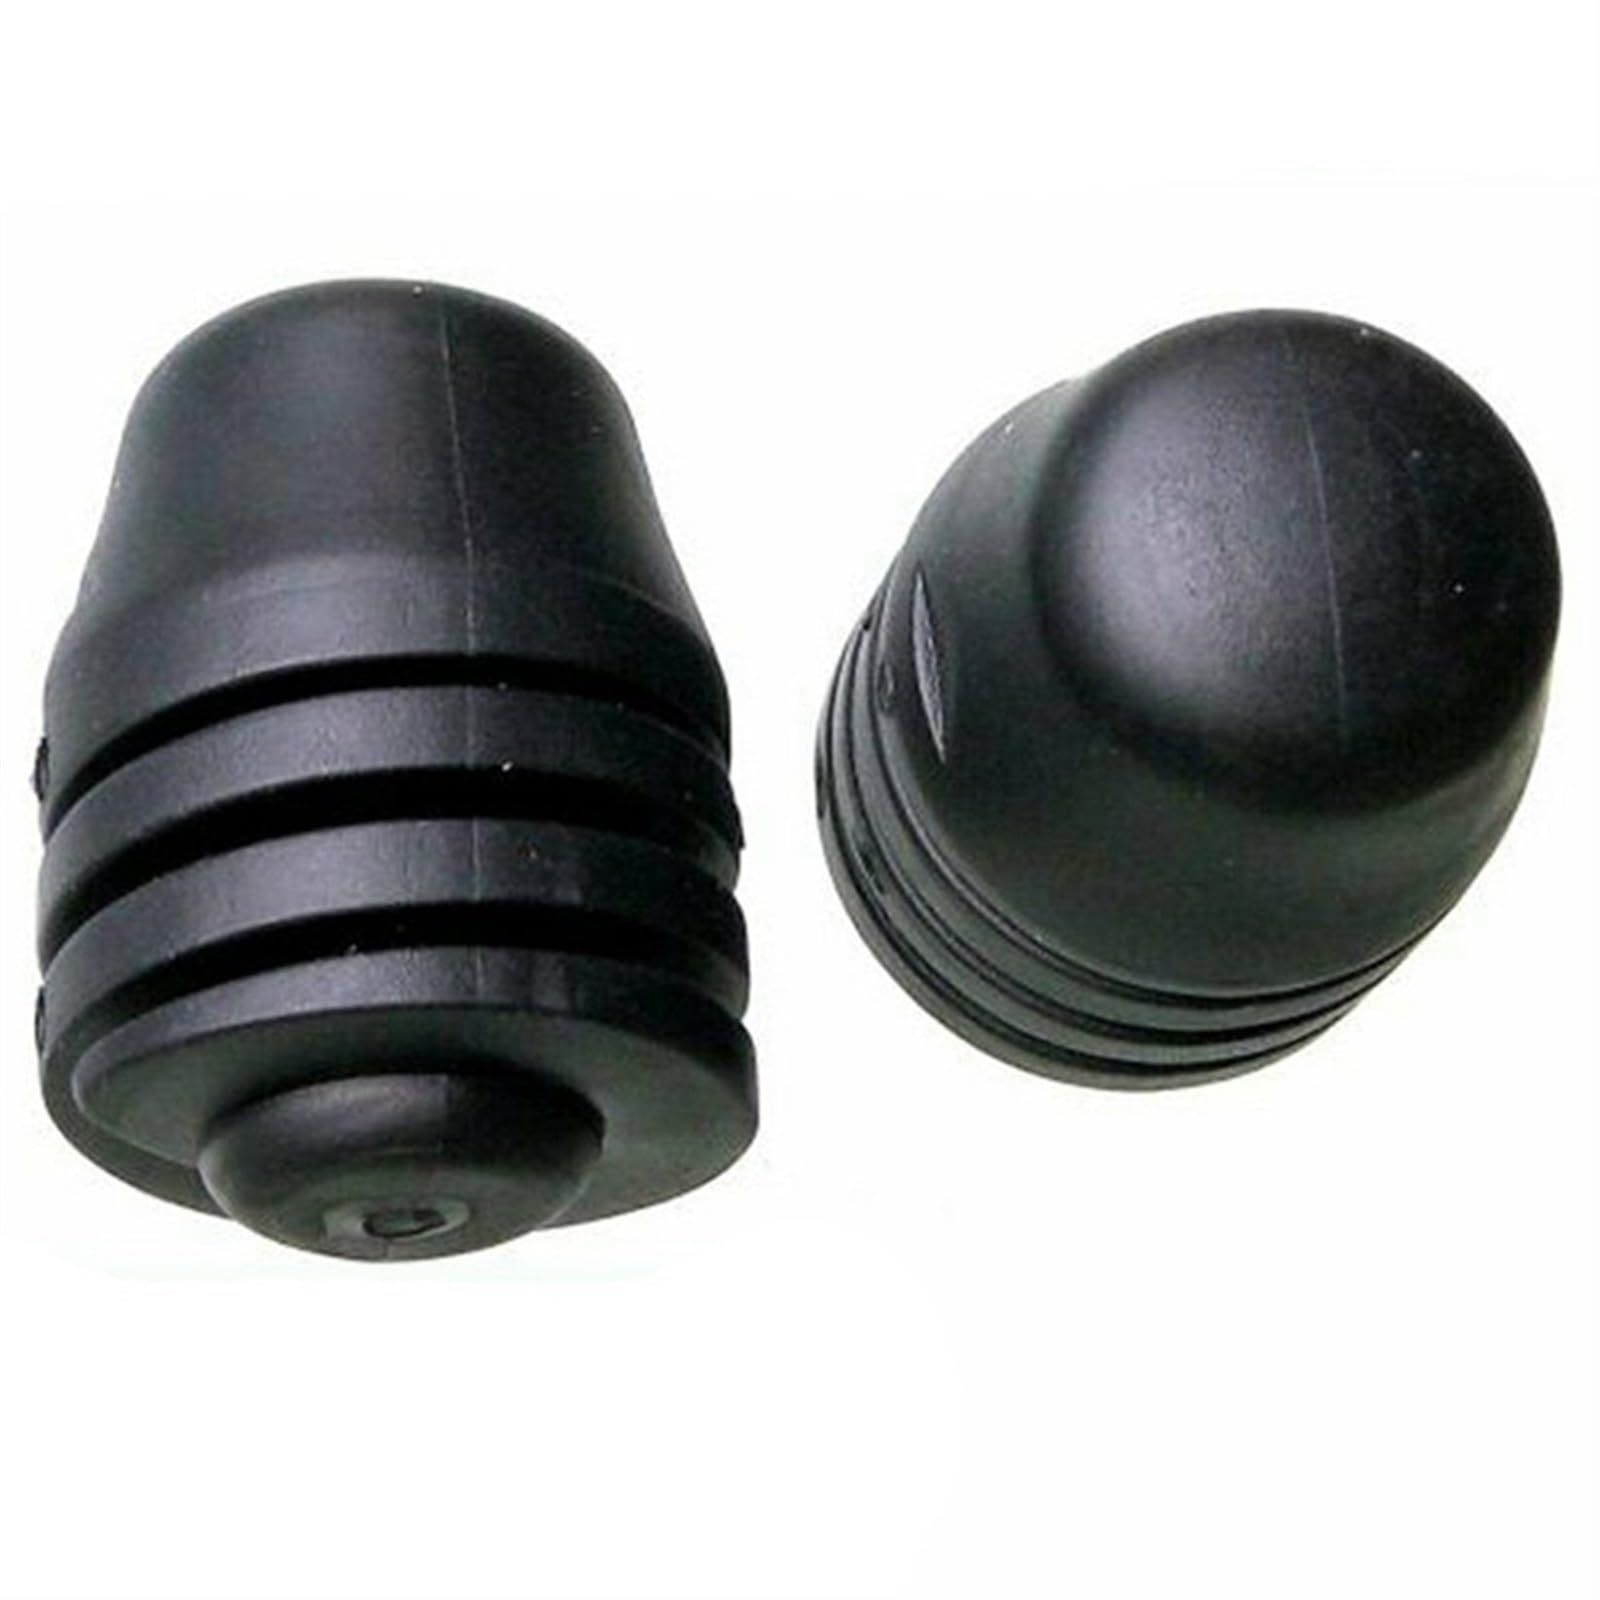 2 Stück schwarze Gummi-Motorhauben-Stoßstangen-Anschlagpuffer 867827500A, kompatibel mit Bora, kompatibel mit Caddy, kompatibel mit Jetta, kompatibel mit Golf, kompatibel mit Passat, kompatibel mit Sk von SolGlo